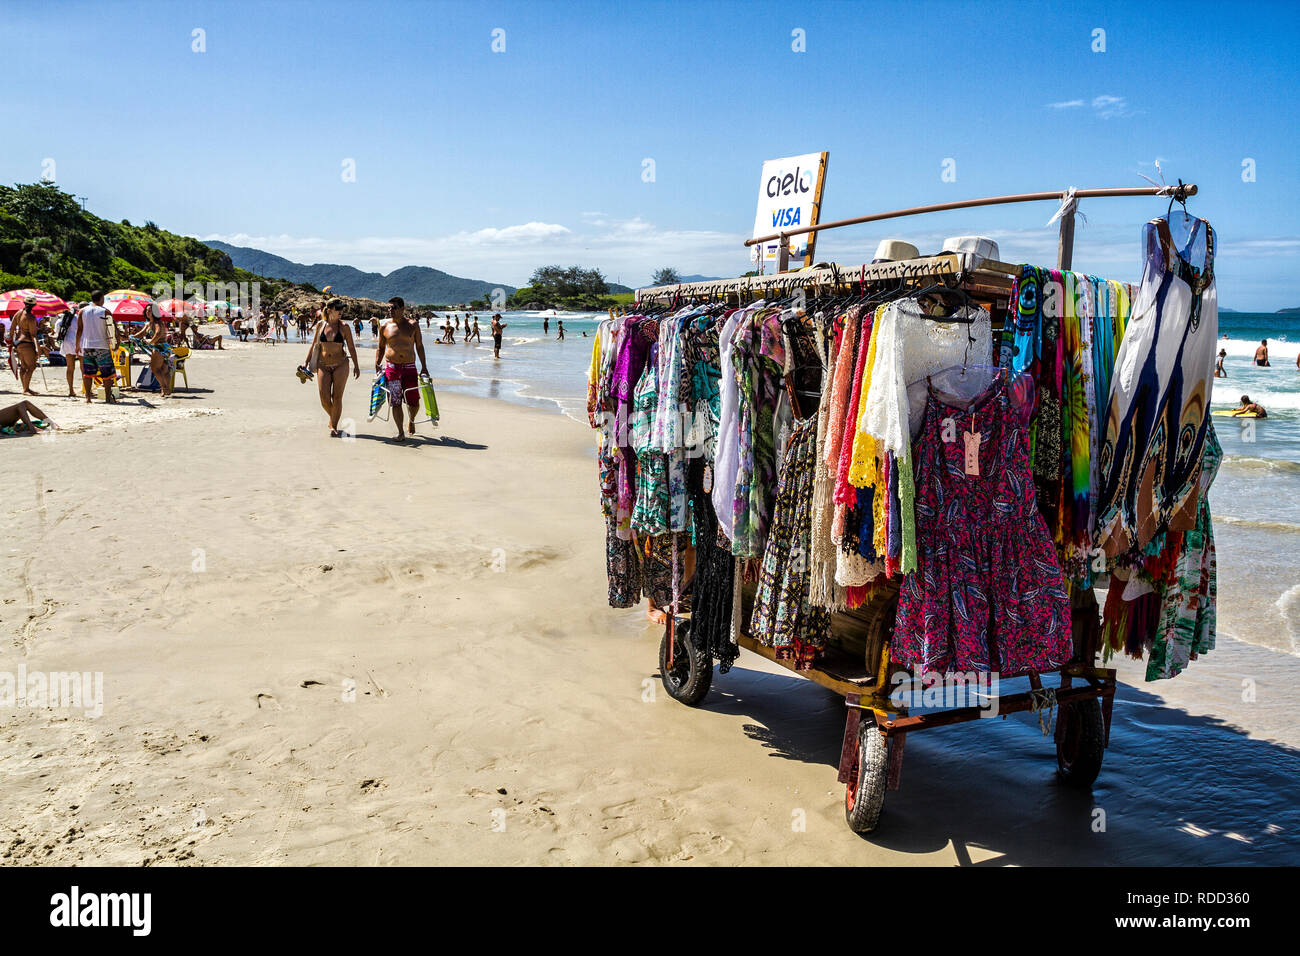 https://c8.alamy.com/compes/rdd360/ropa-en-venta-en-la-playa-de-matadeiro-florianopolis-santa-catarina-brasil-rdd360.jpg